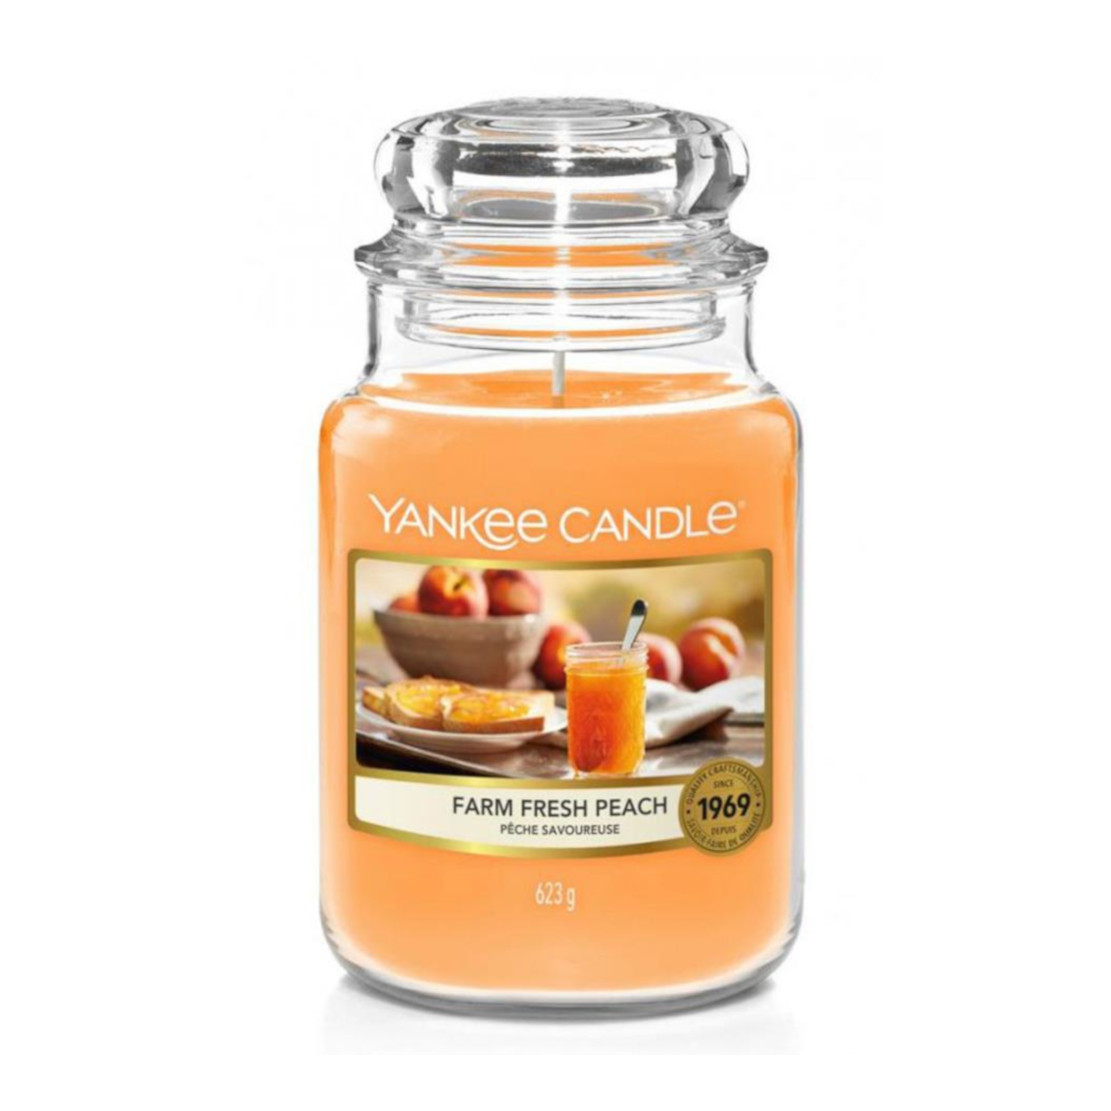 Yankee Candle Farm Fresh Peach Large Jar